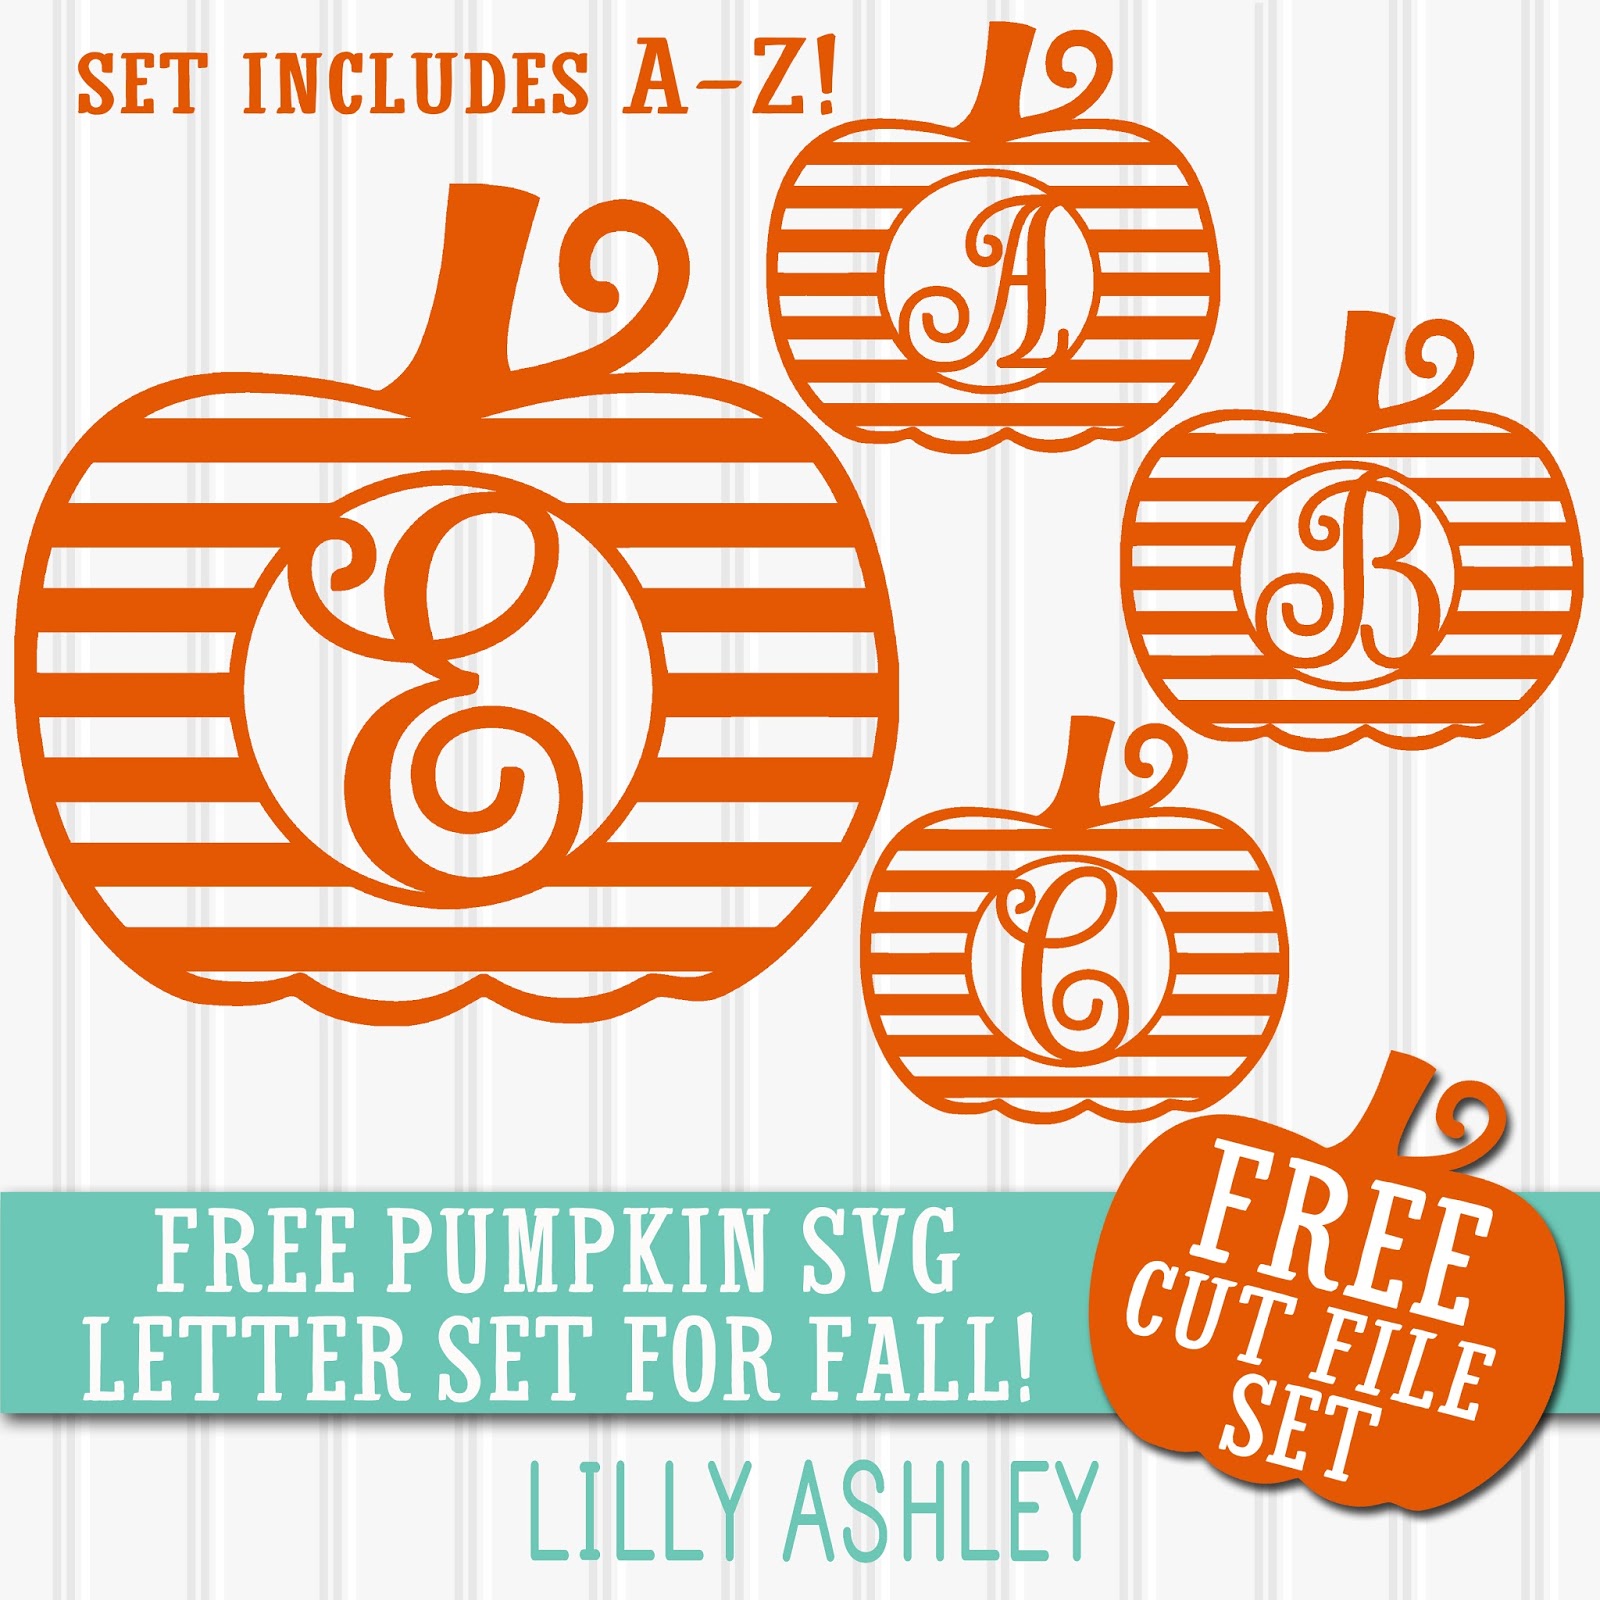 Download Make it Create by LillyAshley...Freebie Downloads: Free Pumpkin SVG Letter Set